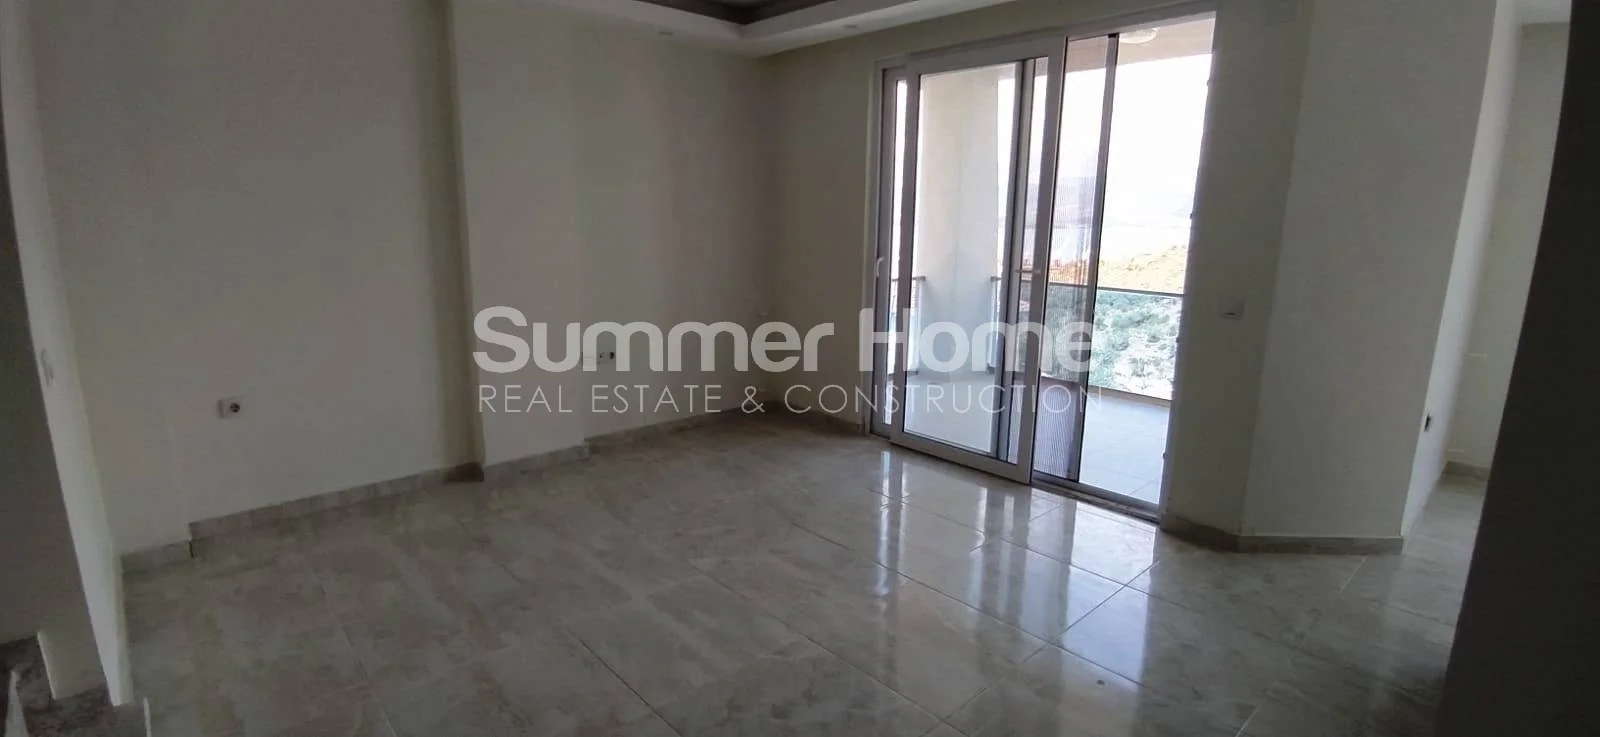 Two-bedroom duplex apartment offering sea view in Gulluk, Bodrum Interior - 10